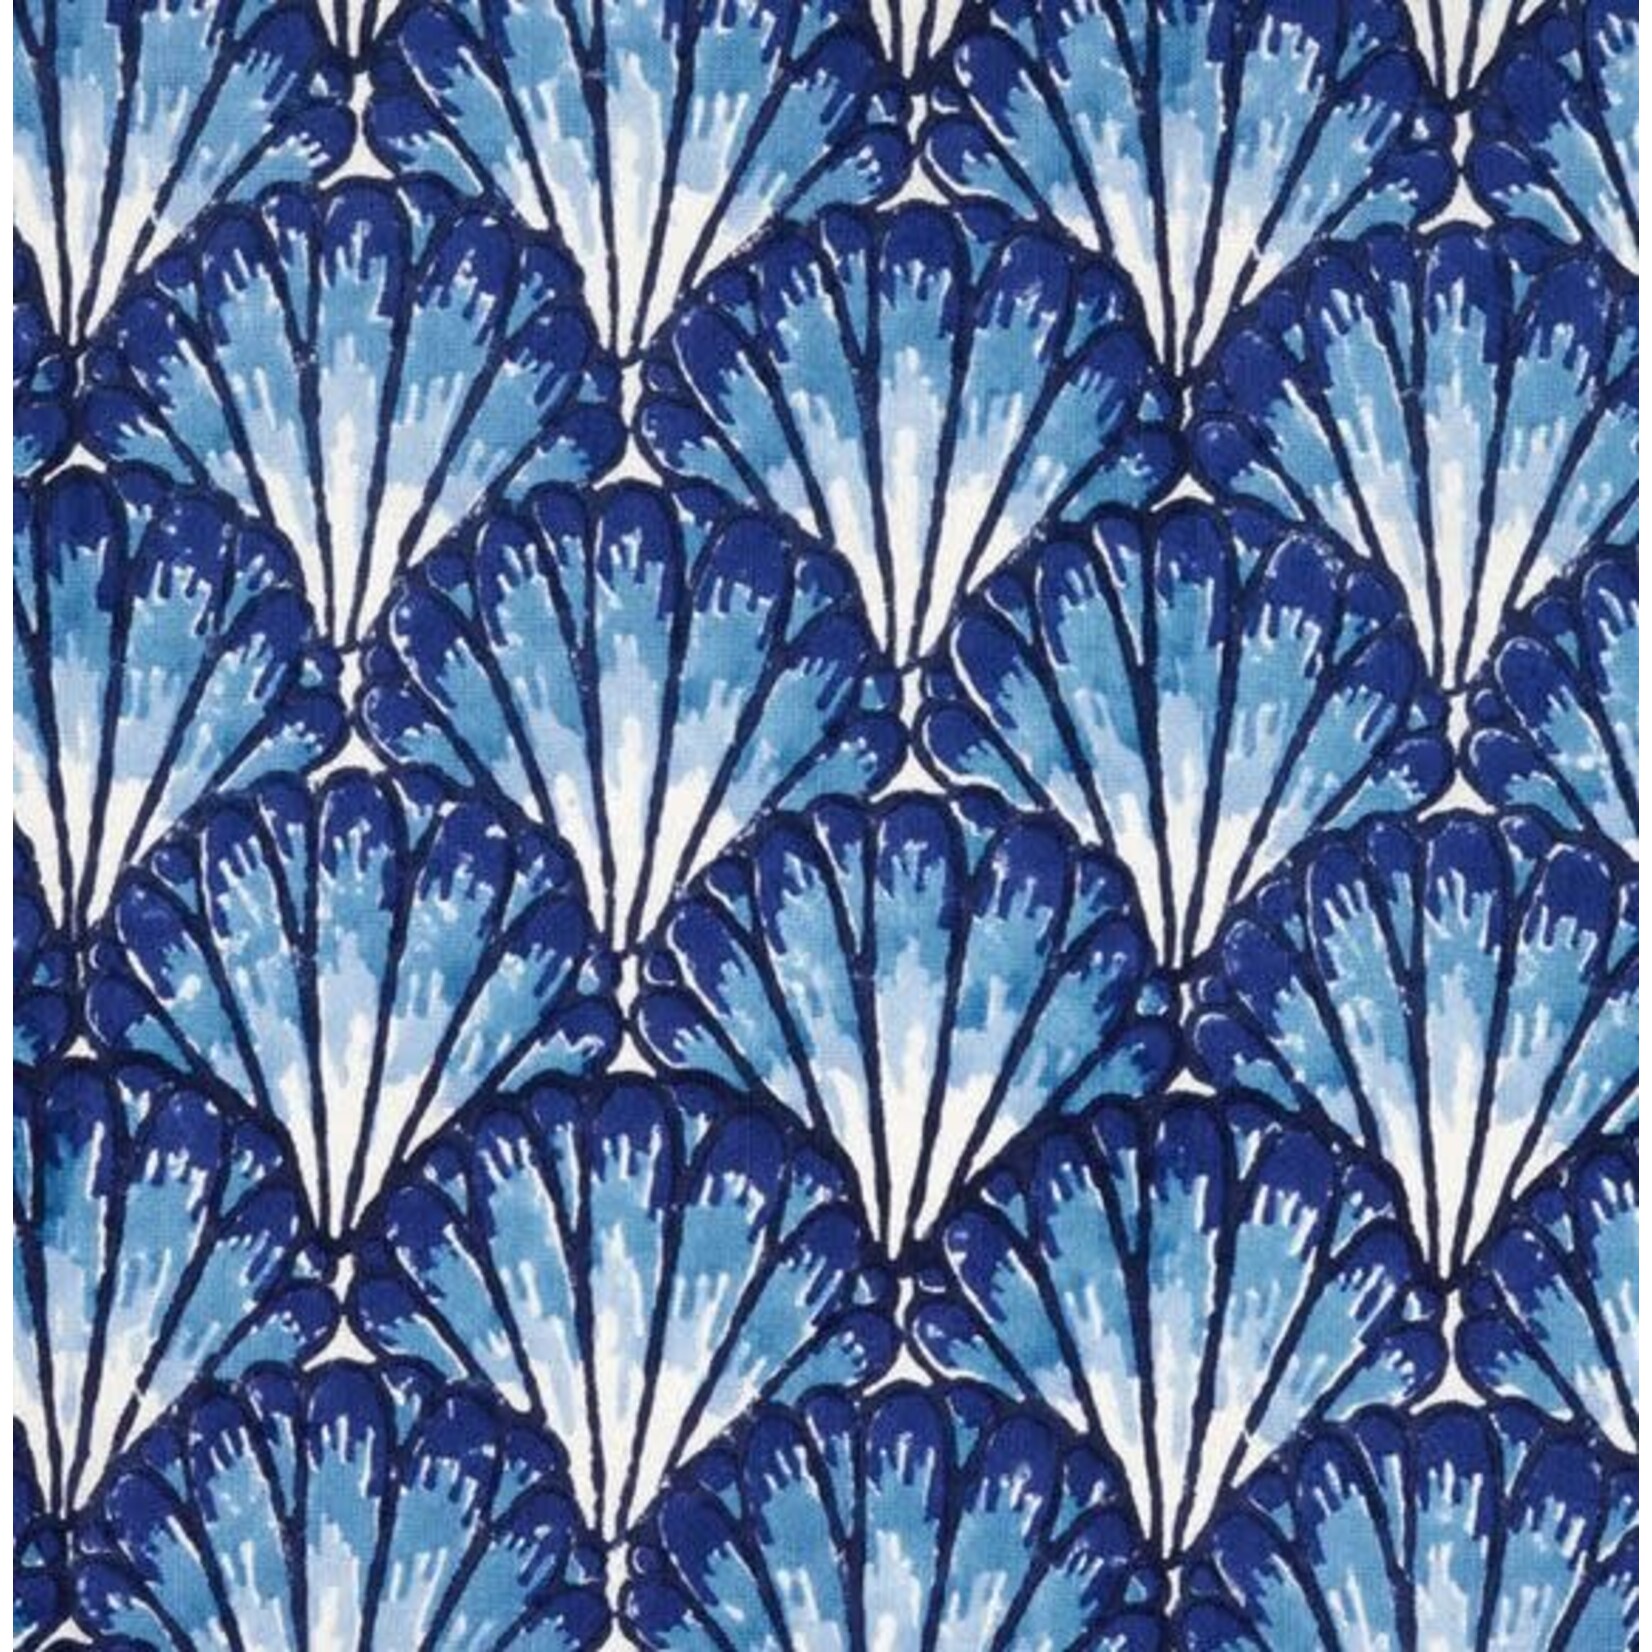 John Robshaw Textiles Fulki Decorative Pillow with Insert 22x22